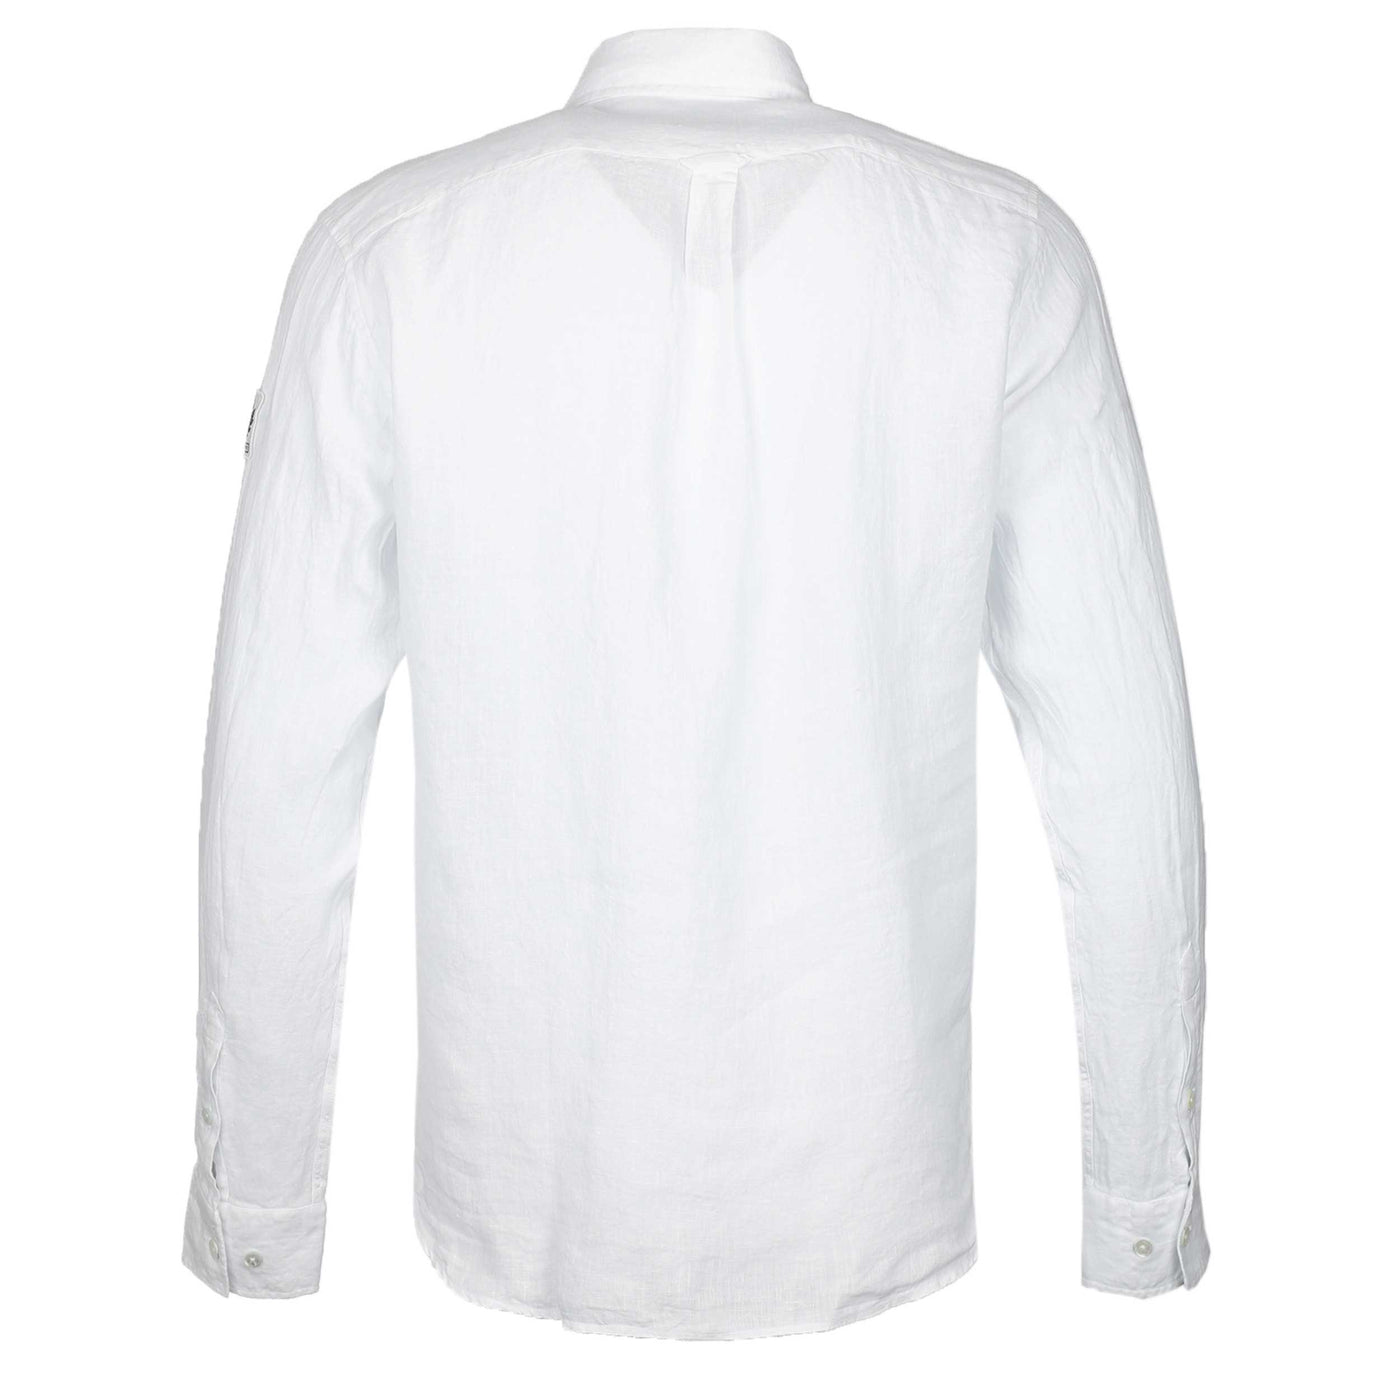 Belstaff Linen Pitch Shirt in White Back